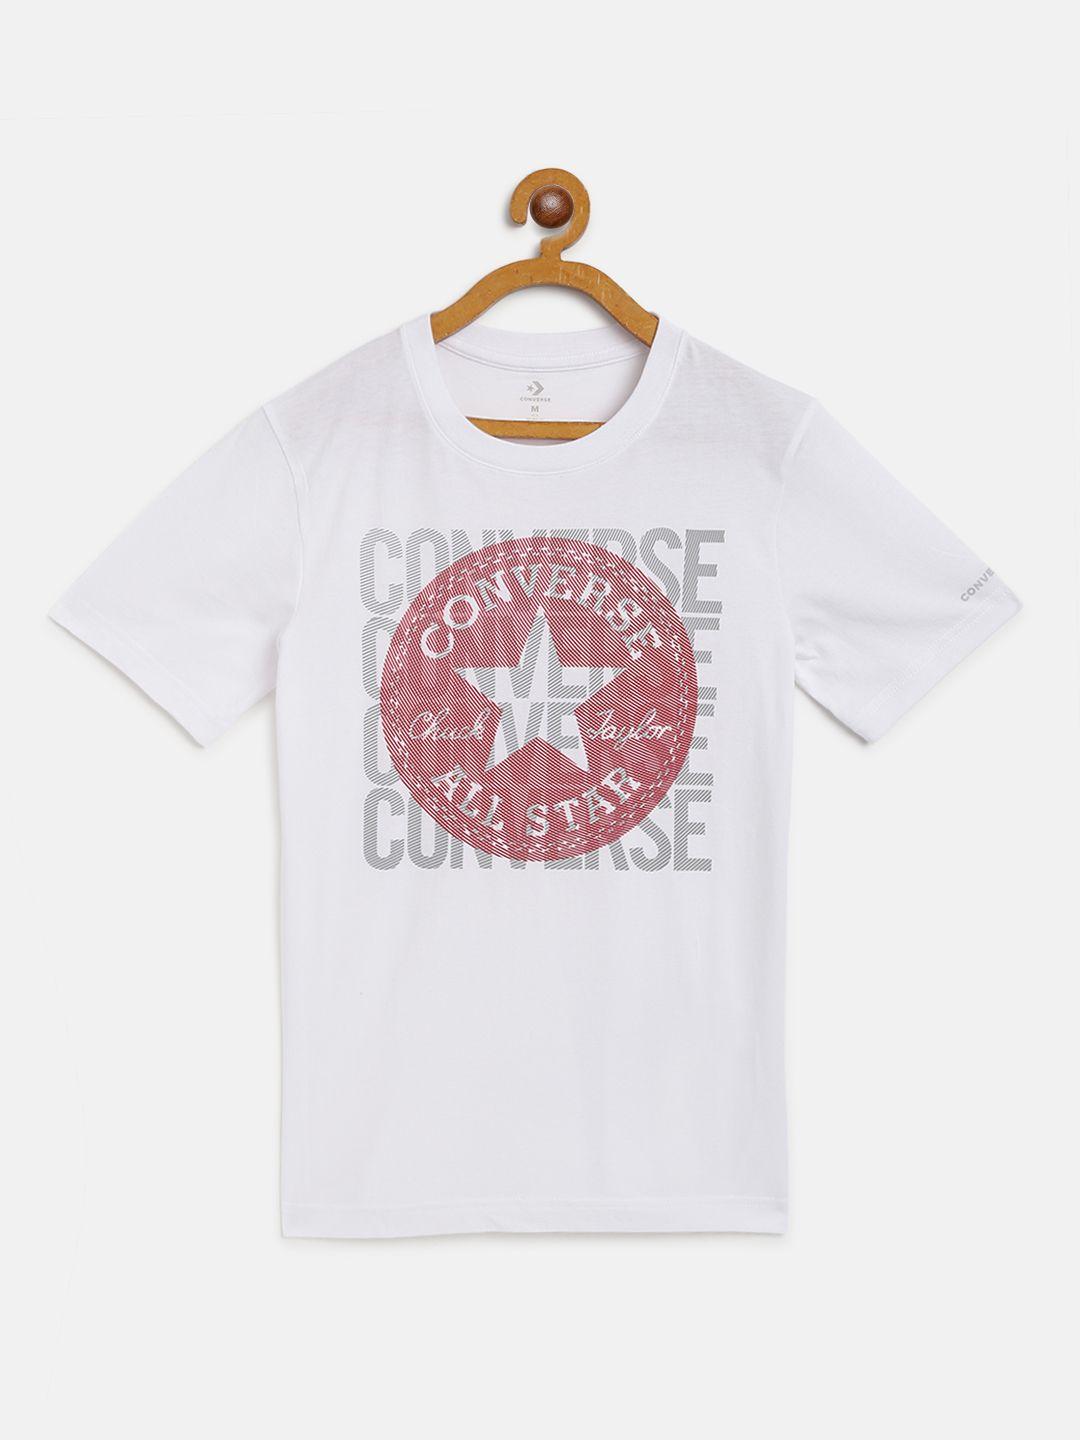 Converse Boys White & Rust Red Brand Logo Print Round Neck T-shirt